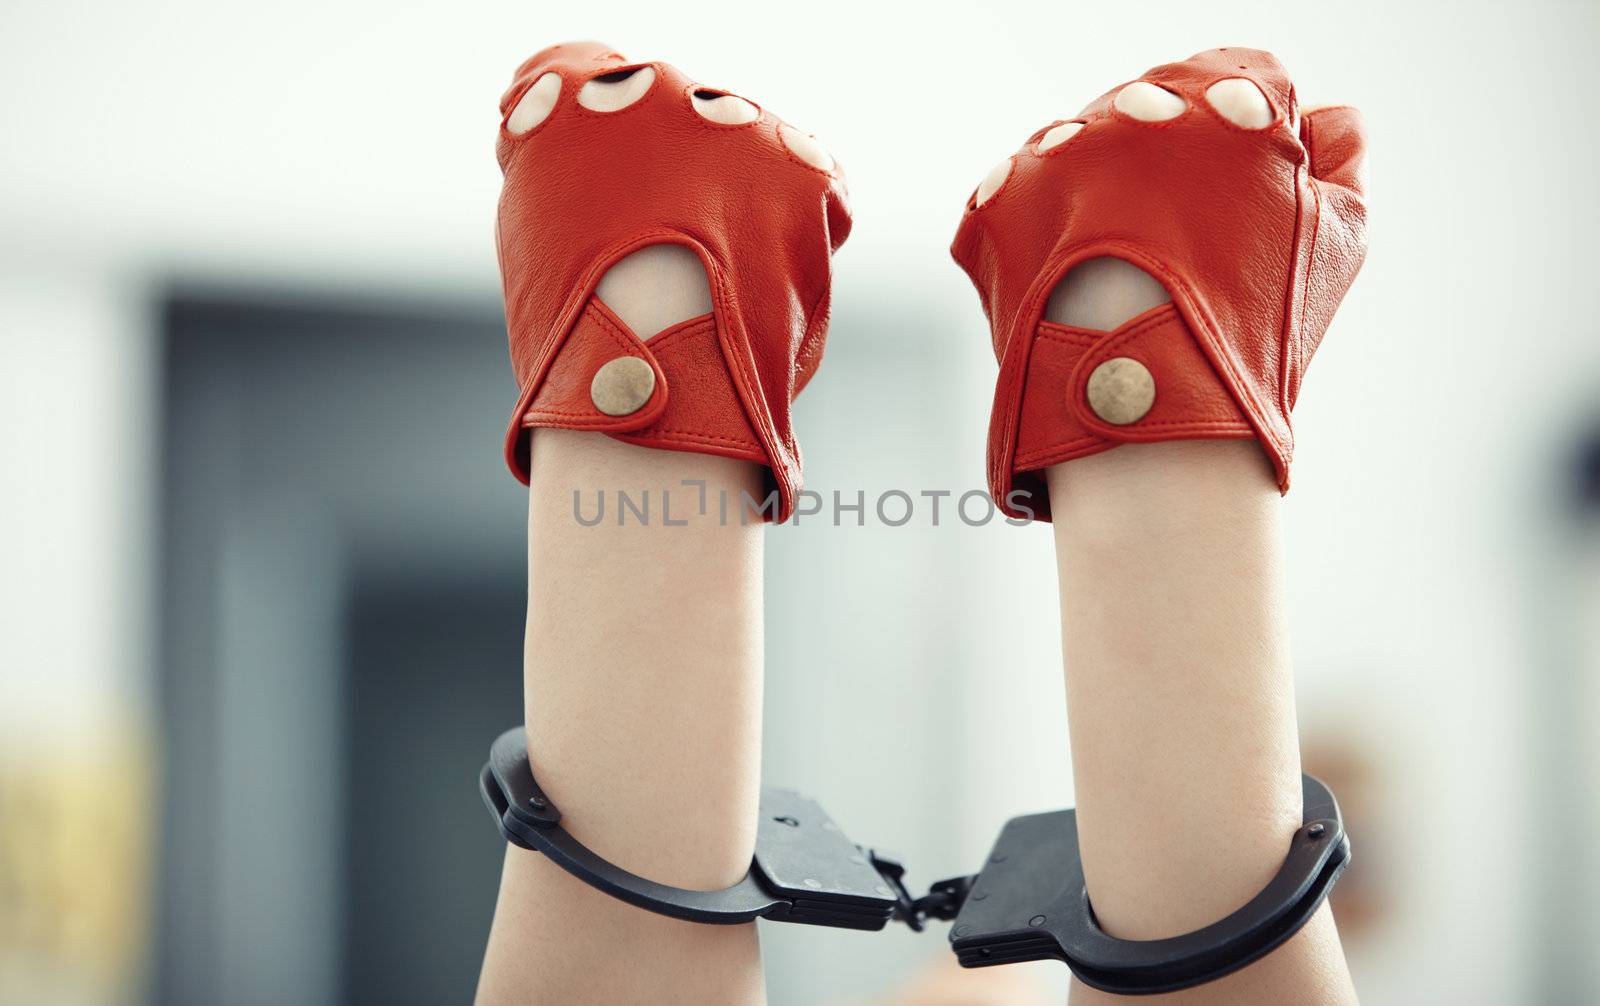 Hands in wristlets by Novic